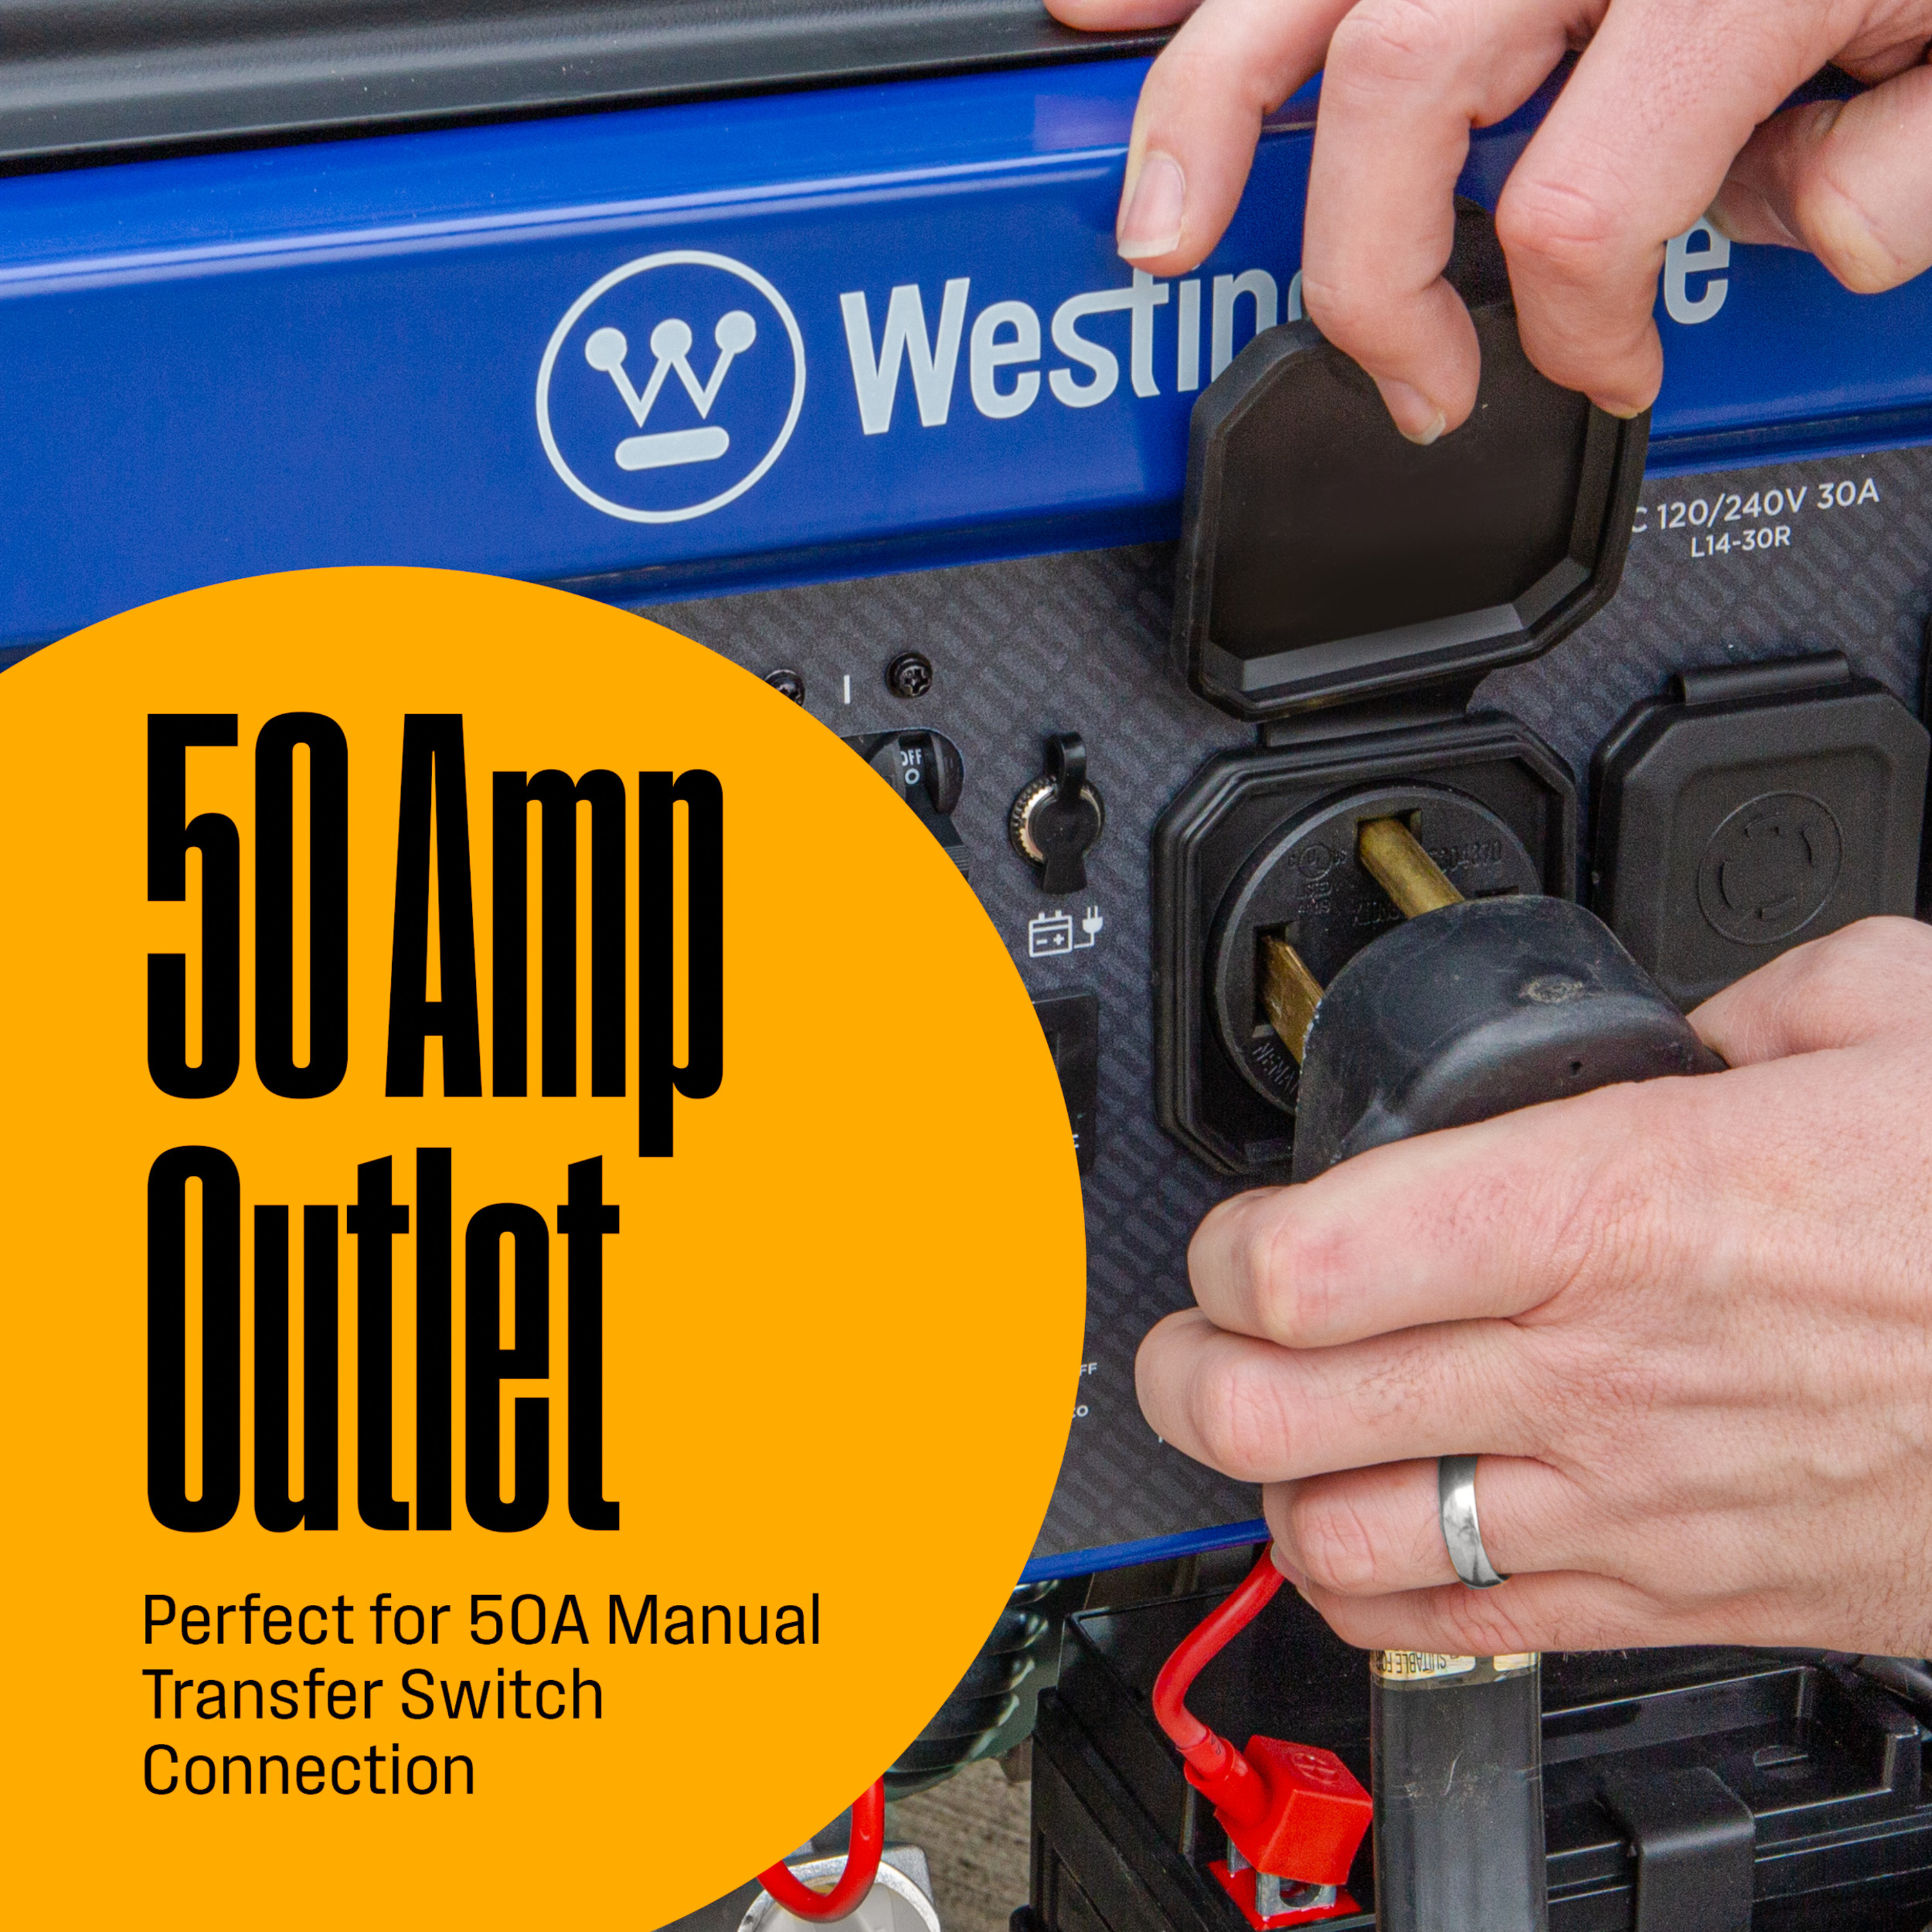 Westinghouse 12,500 Peak Watt Dual Fuel Portable Generator, Electric Start, Transfer Switch Ready - image 5 of 13